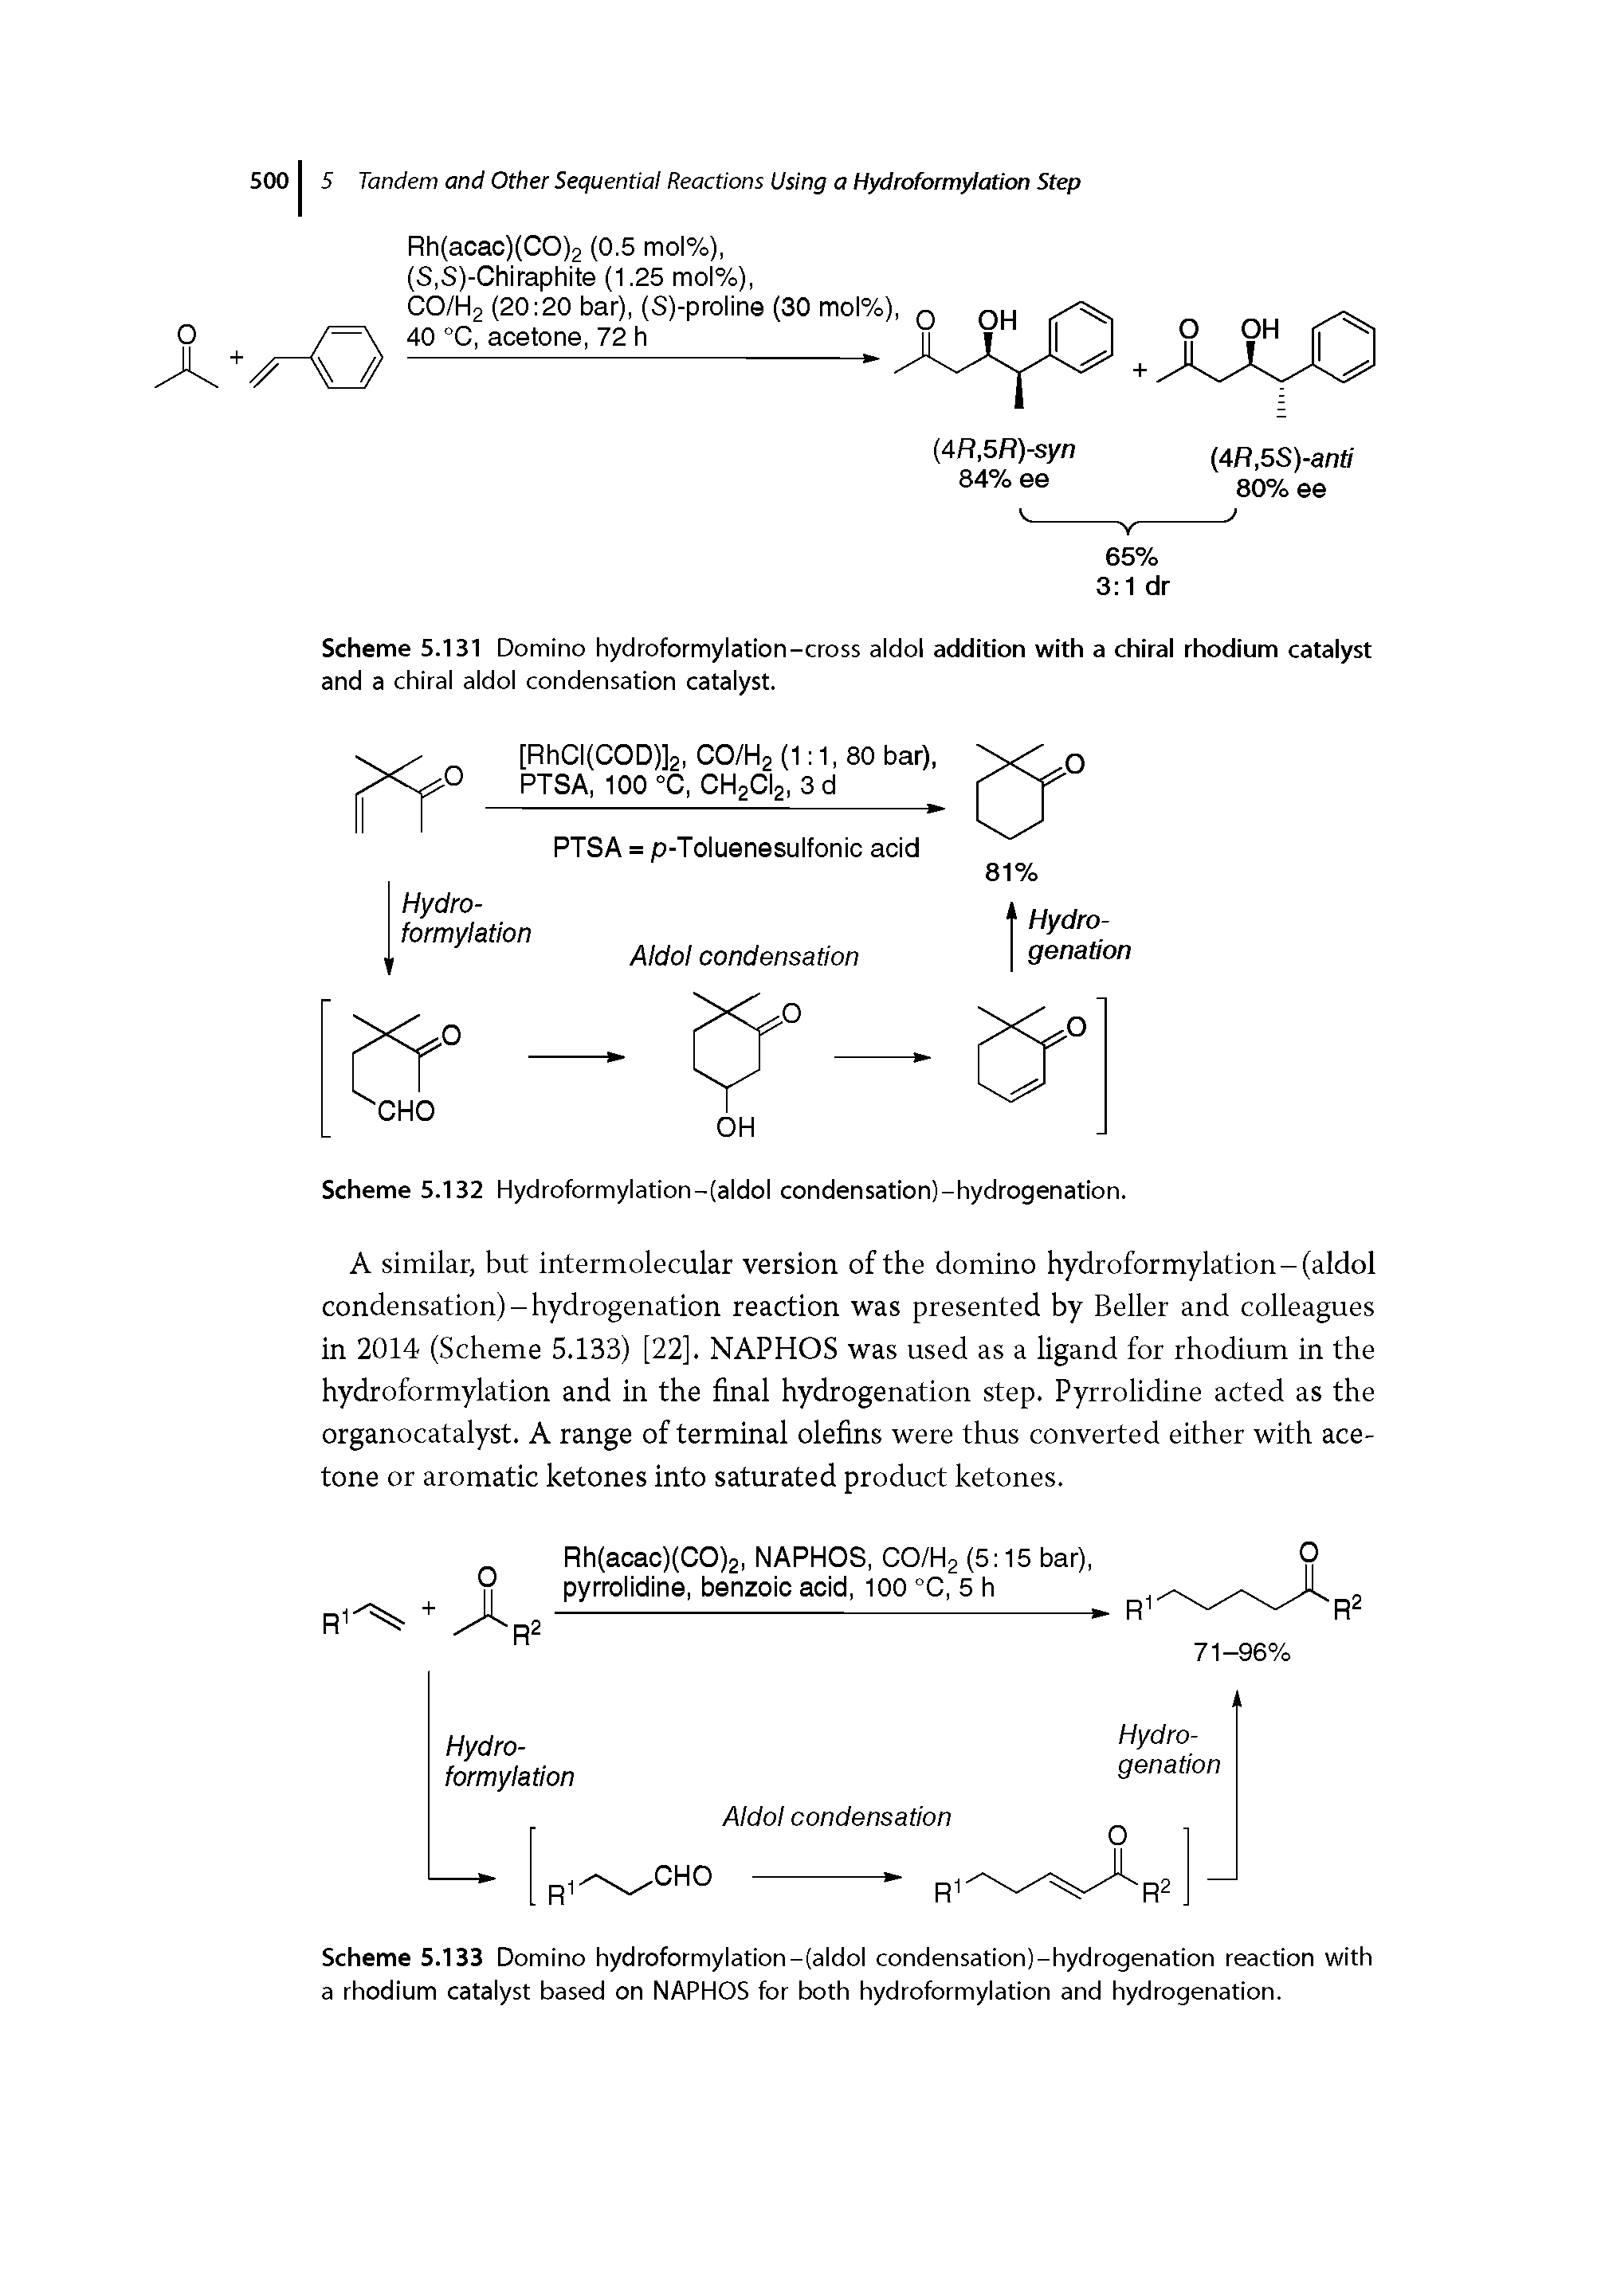 Scheme 5.133 Domino hydroformylation-(aldol condensation)-hydrogenation reaction with a rhodium catalyst based on NAPHOS for both hydroformylation and hydrogenation.